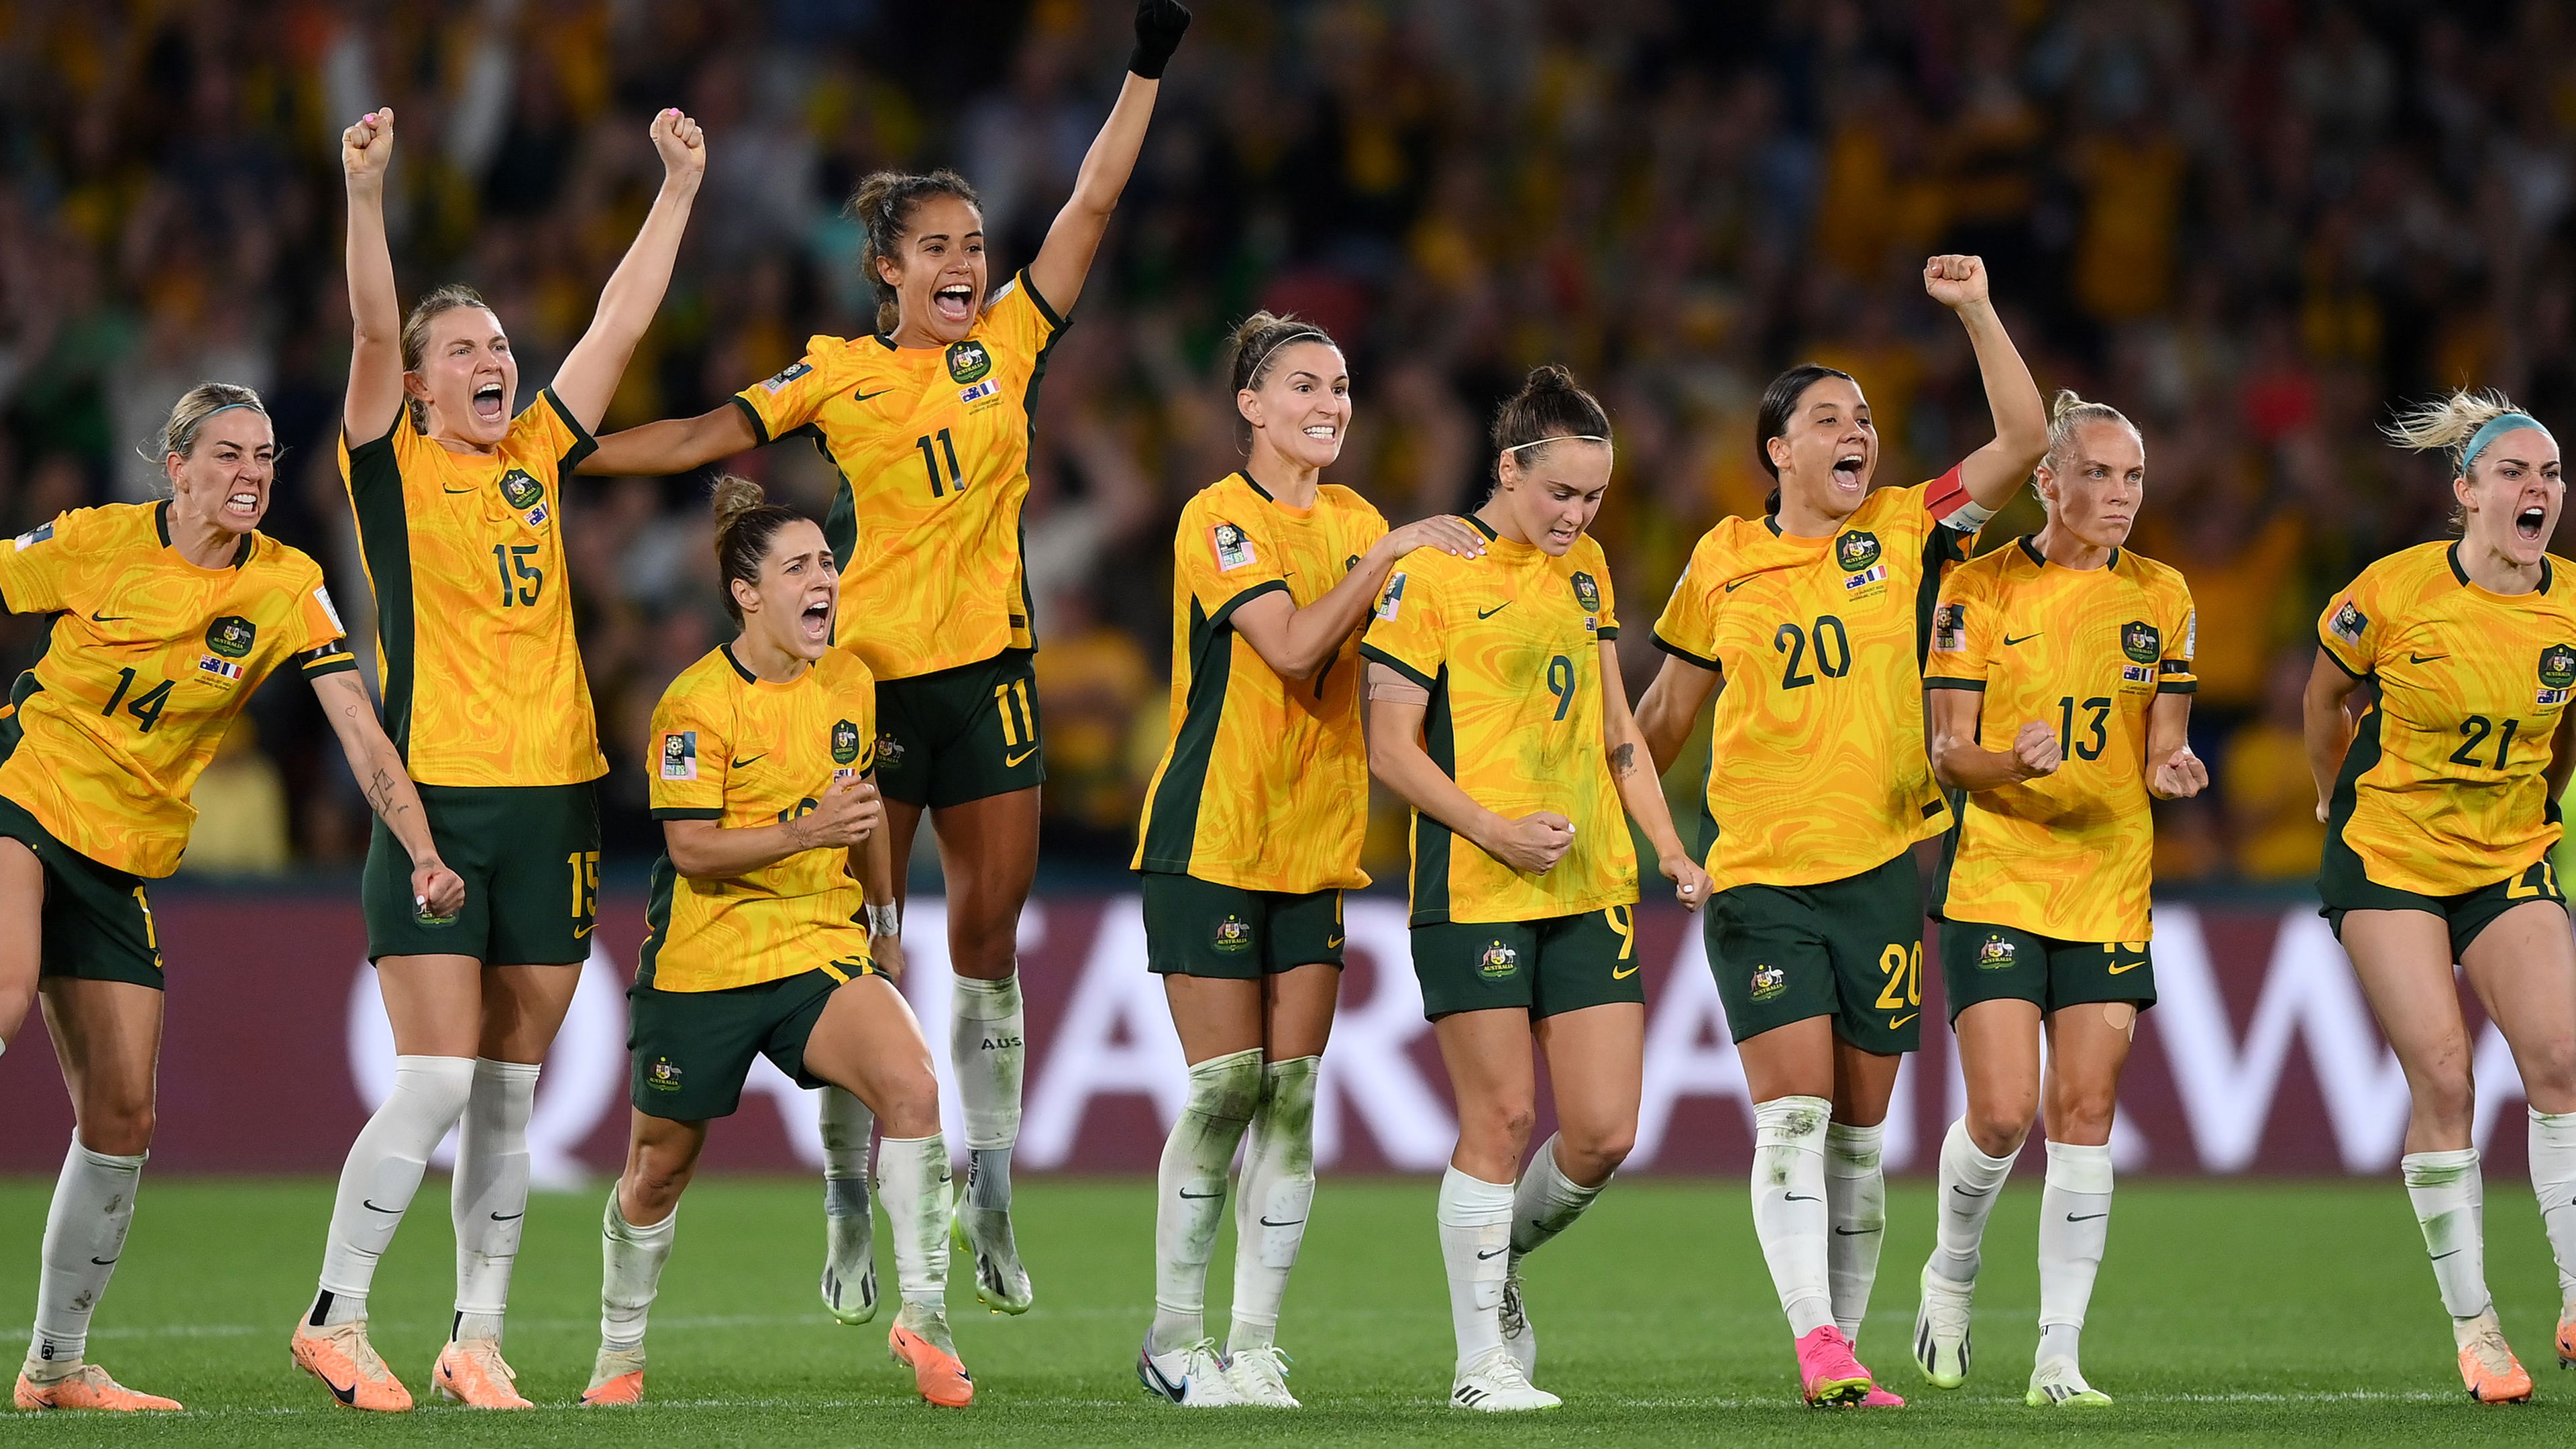 Matildas triumph in penalty shootout thriller over France to book World Cup semi final